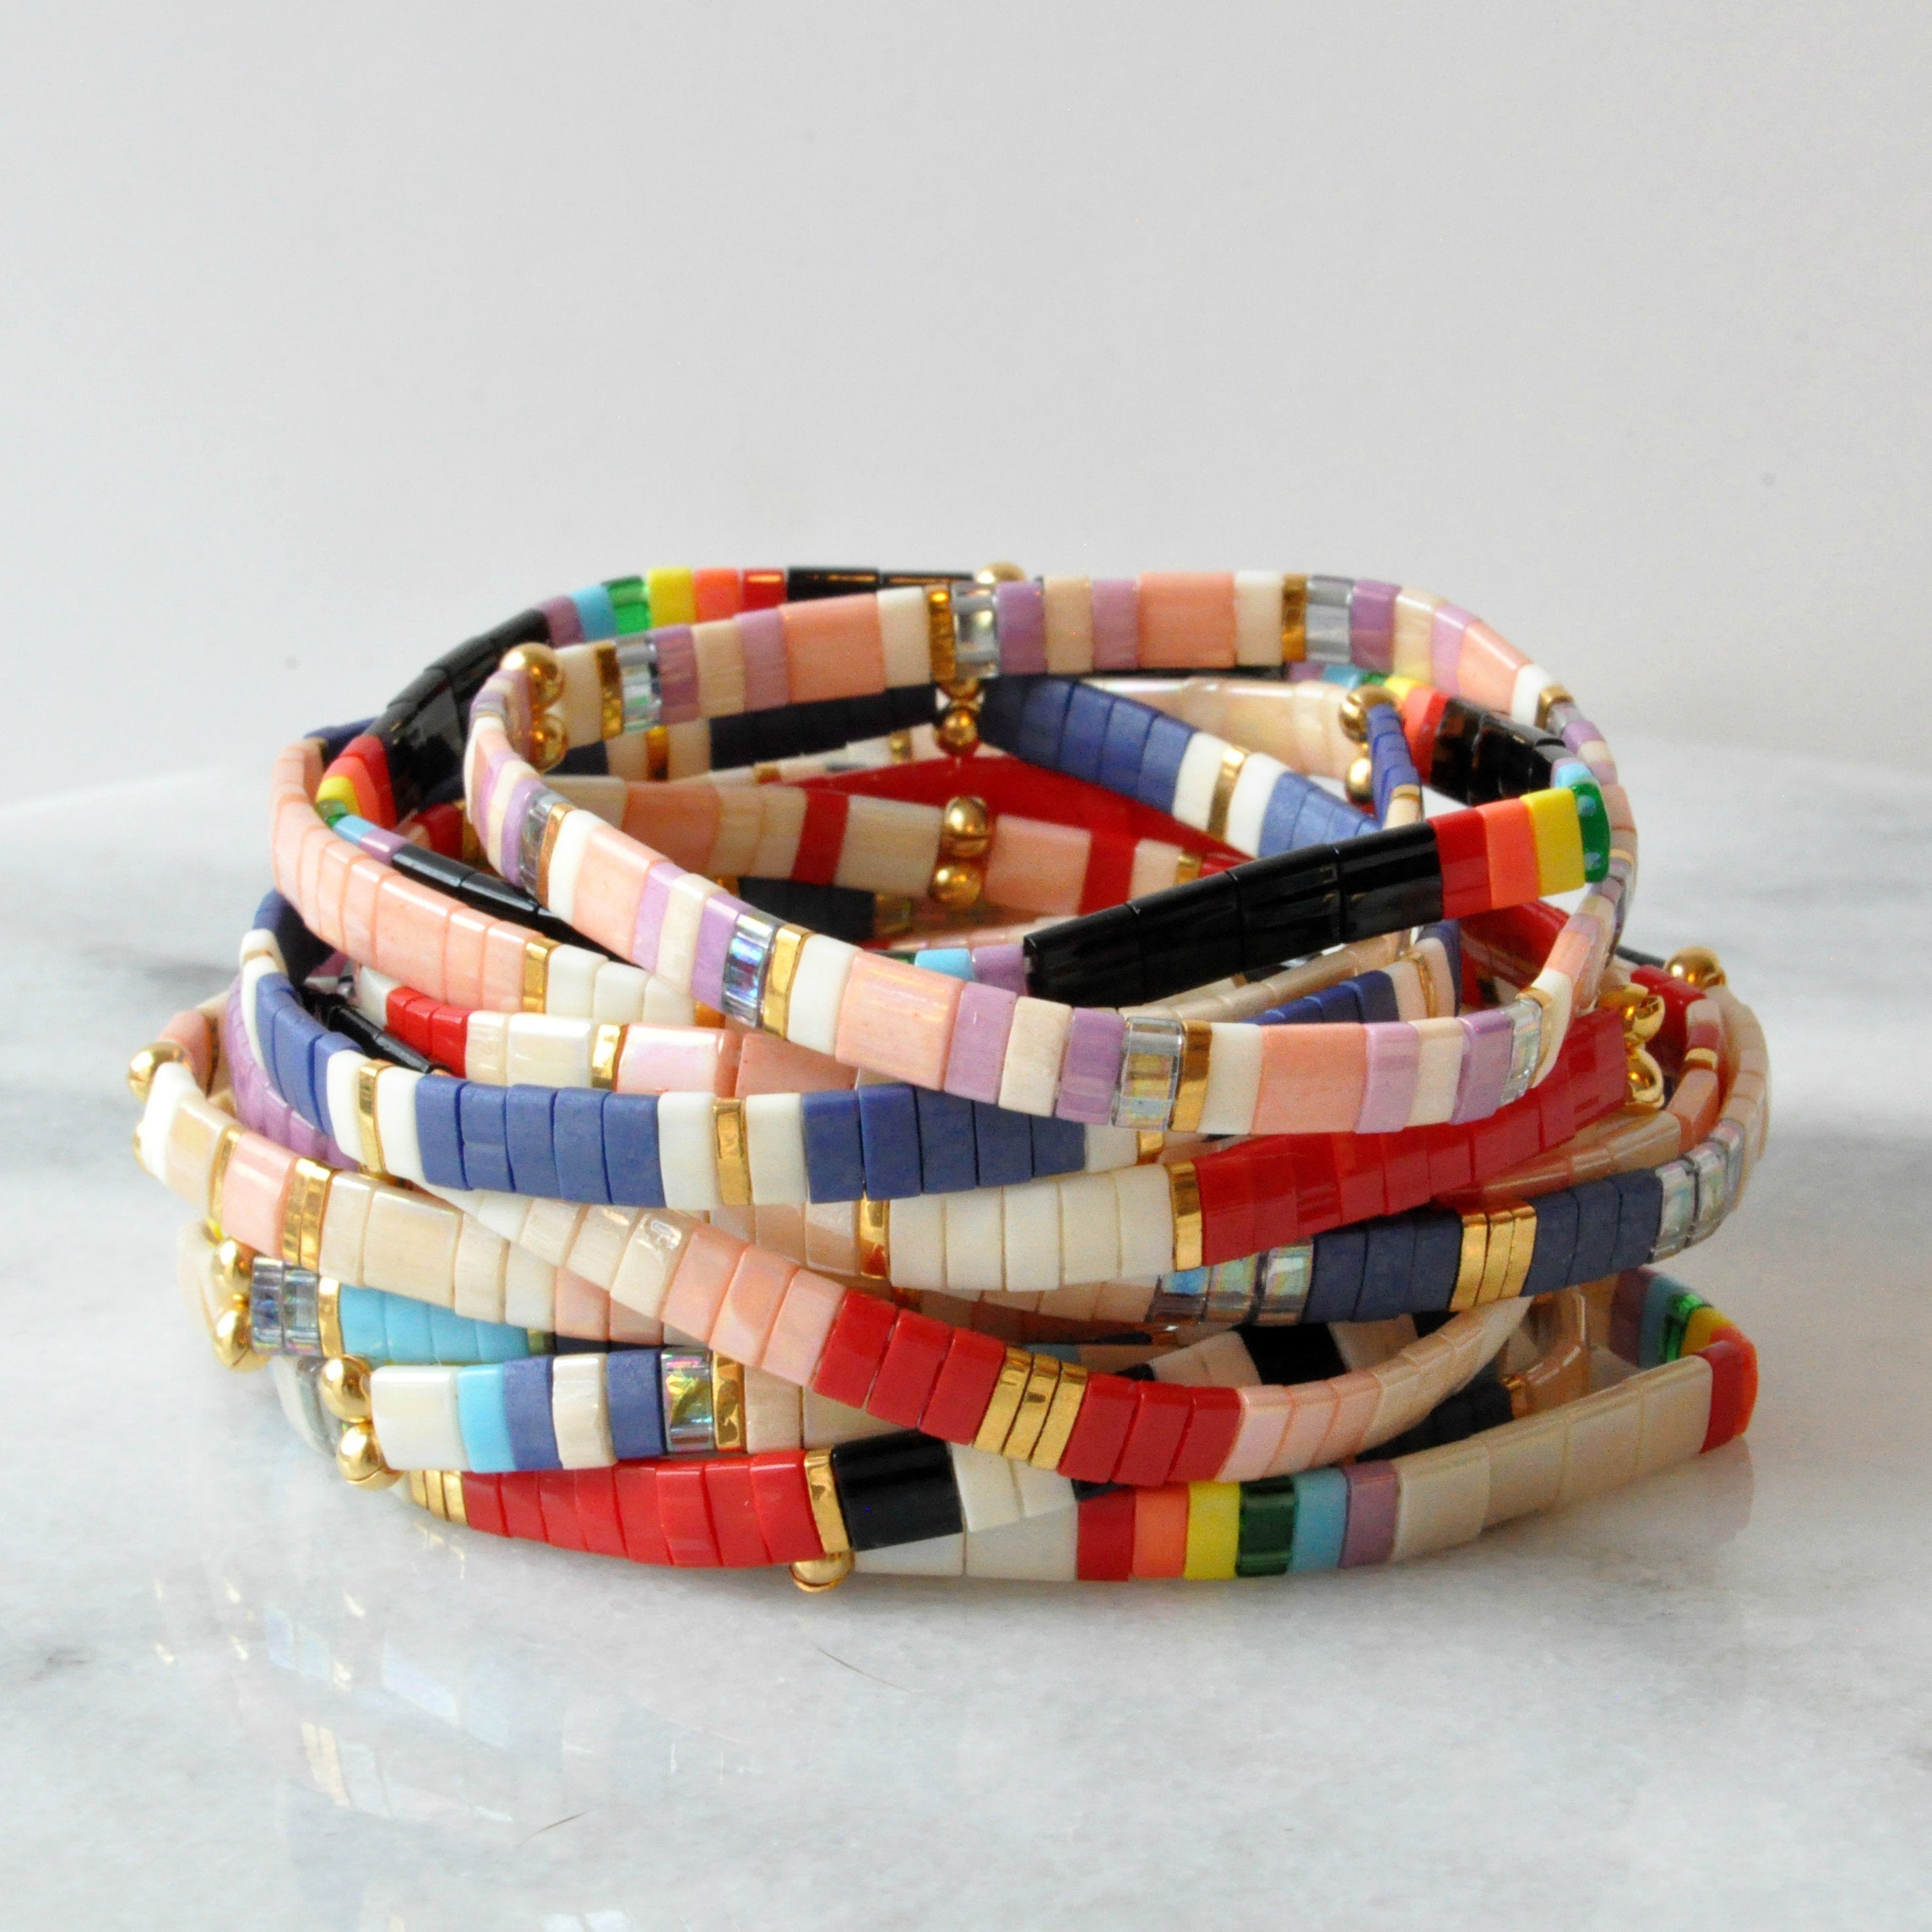 Libby & Smee Stretch Tile Bracelets in Assorted Patterns, Still Life